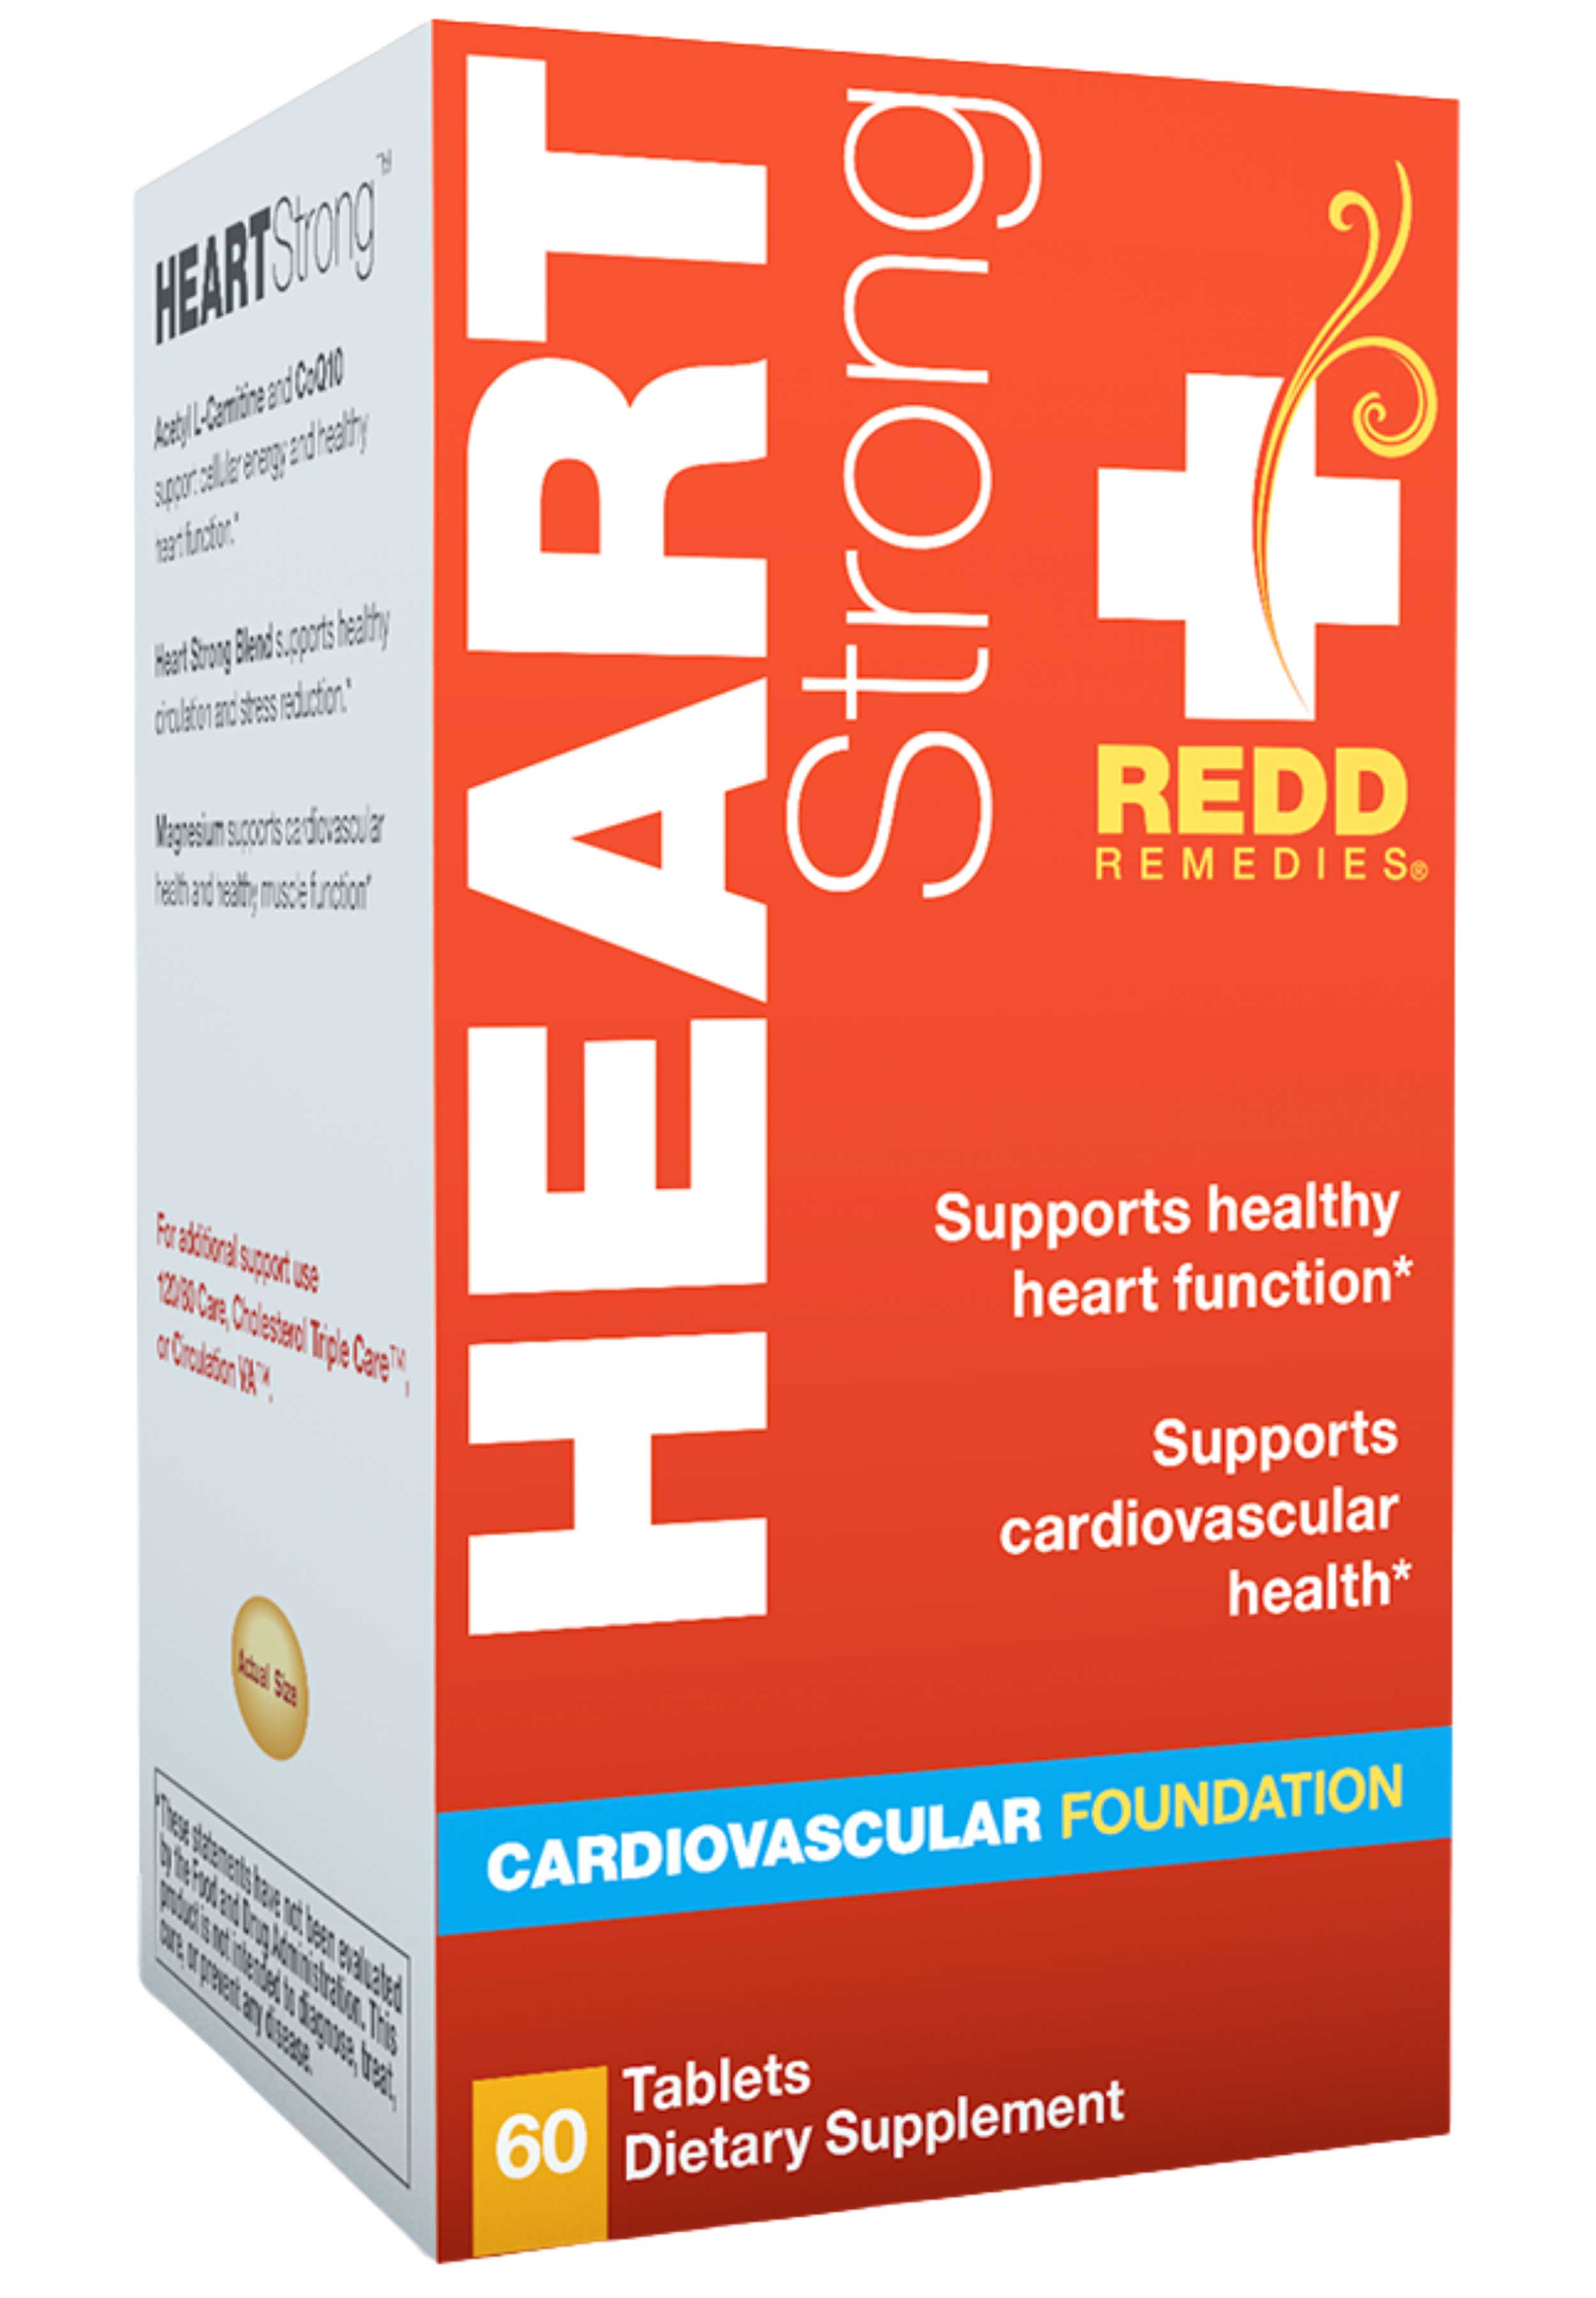 Redd Remedies Heart Strong